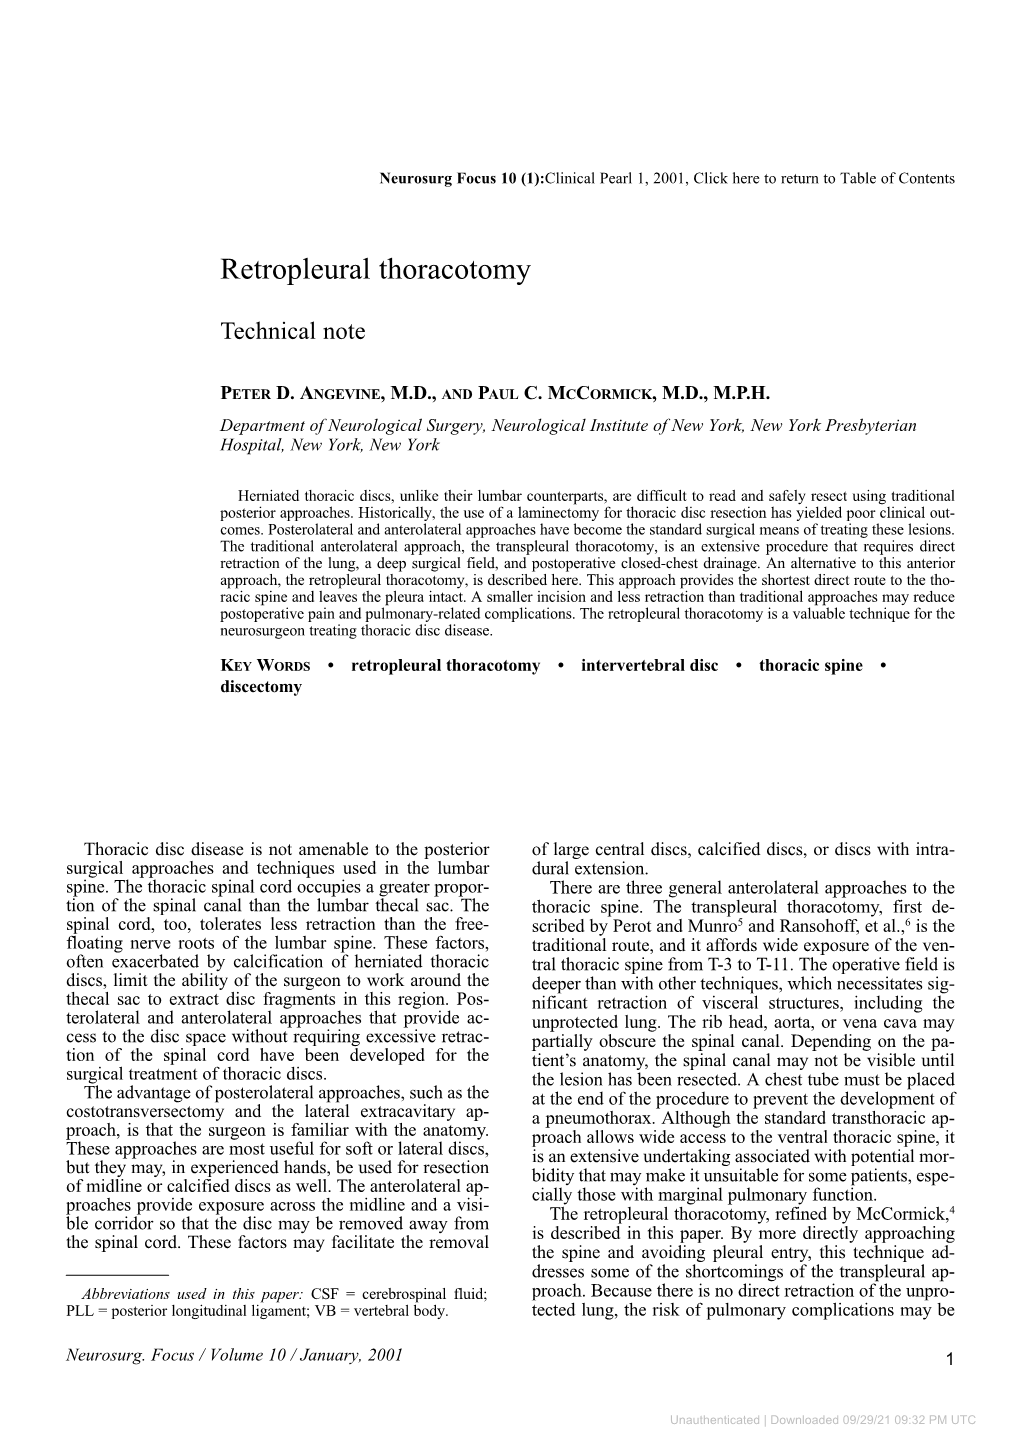 Retropleural Thoracotomy